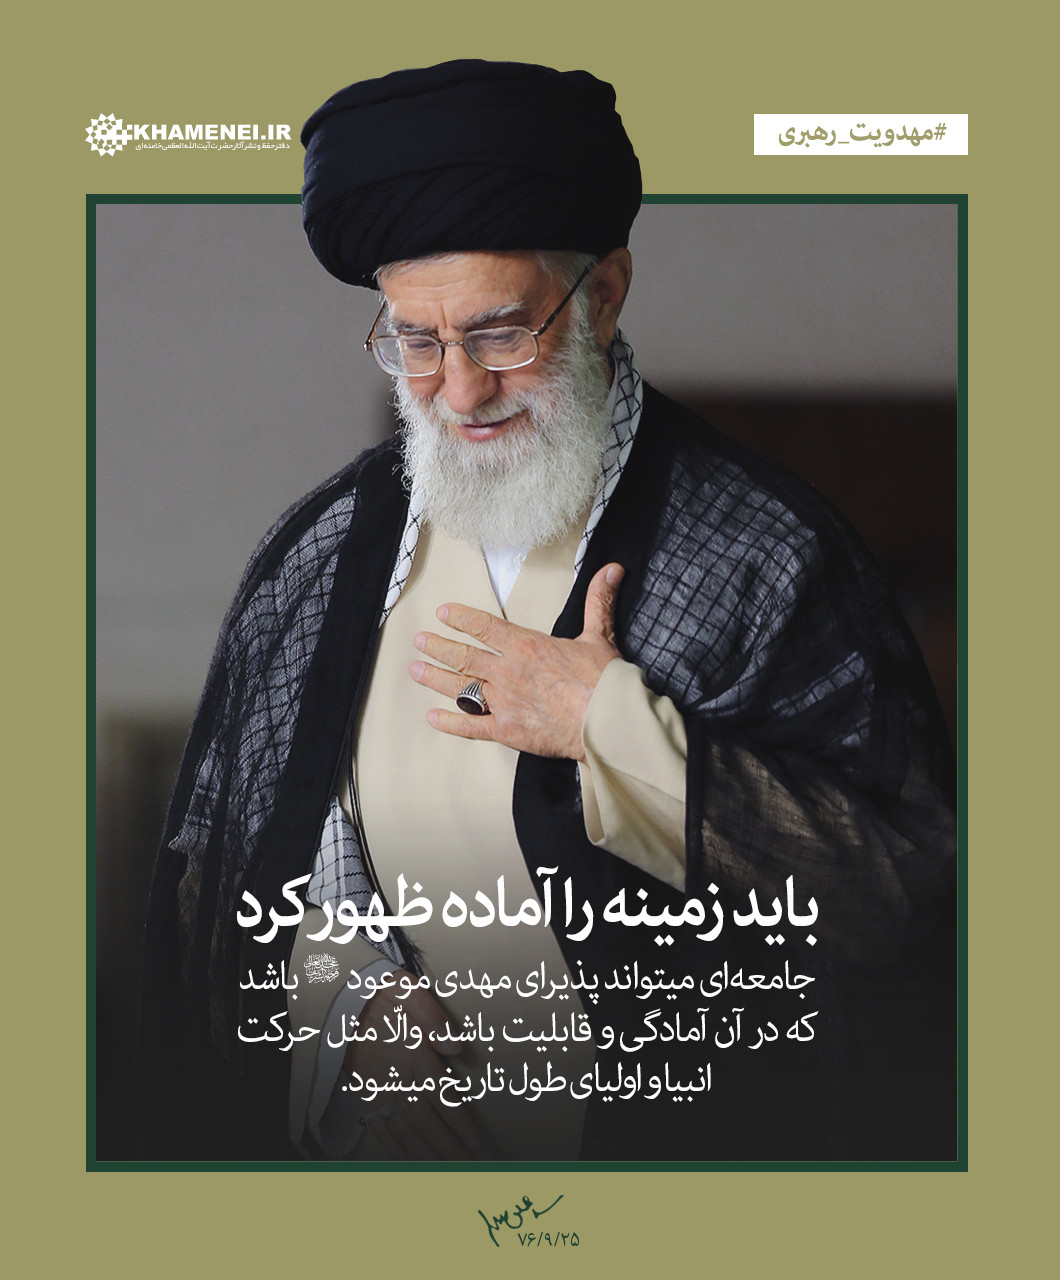 http://idc0-cdn0.khamenei.ir/ndata/news/34597/B/13950719_0434597.jpg